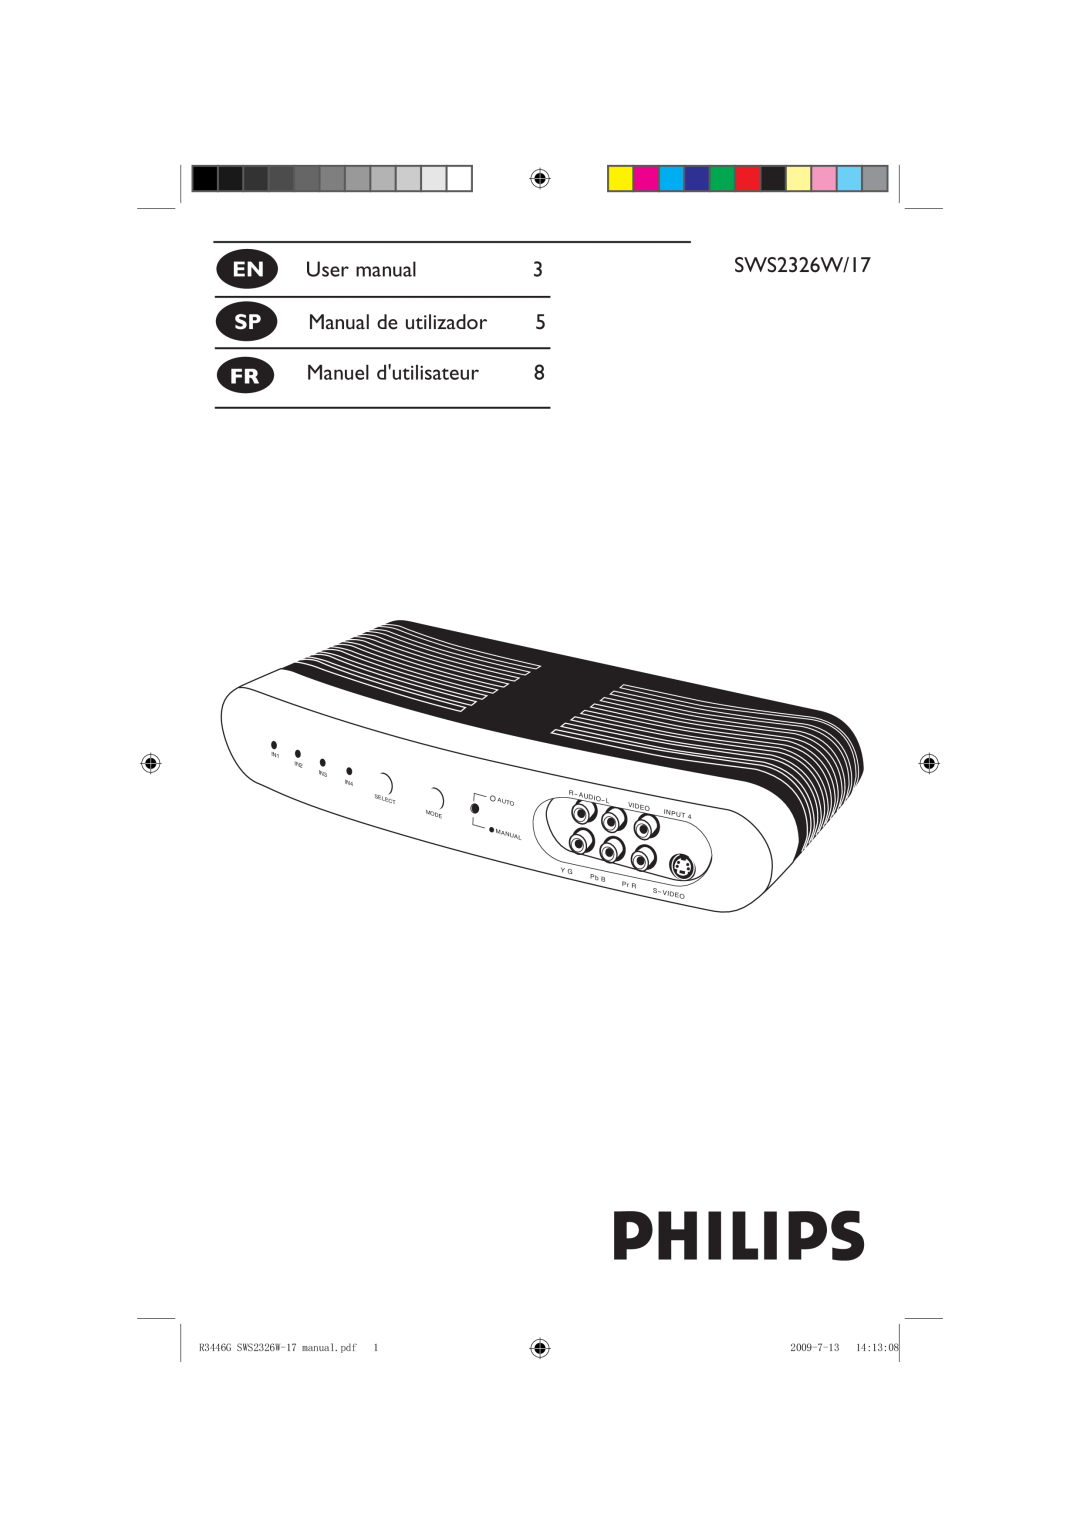 Philips SWS2326W/17 user manual Manual de utilizador, Manuel dutilisateur, 5*6 6 PDQXDOSGI, VIDEO Pr R 